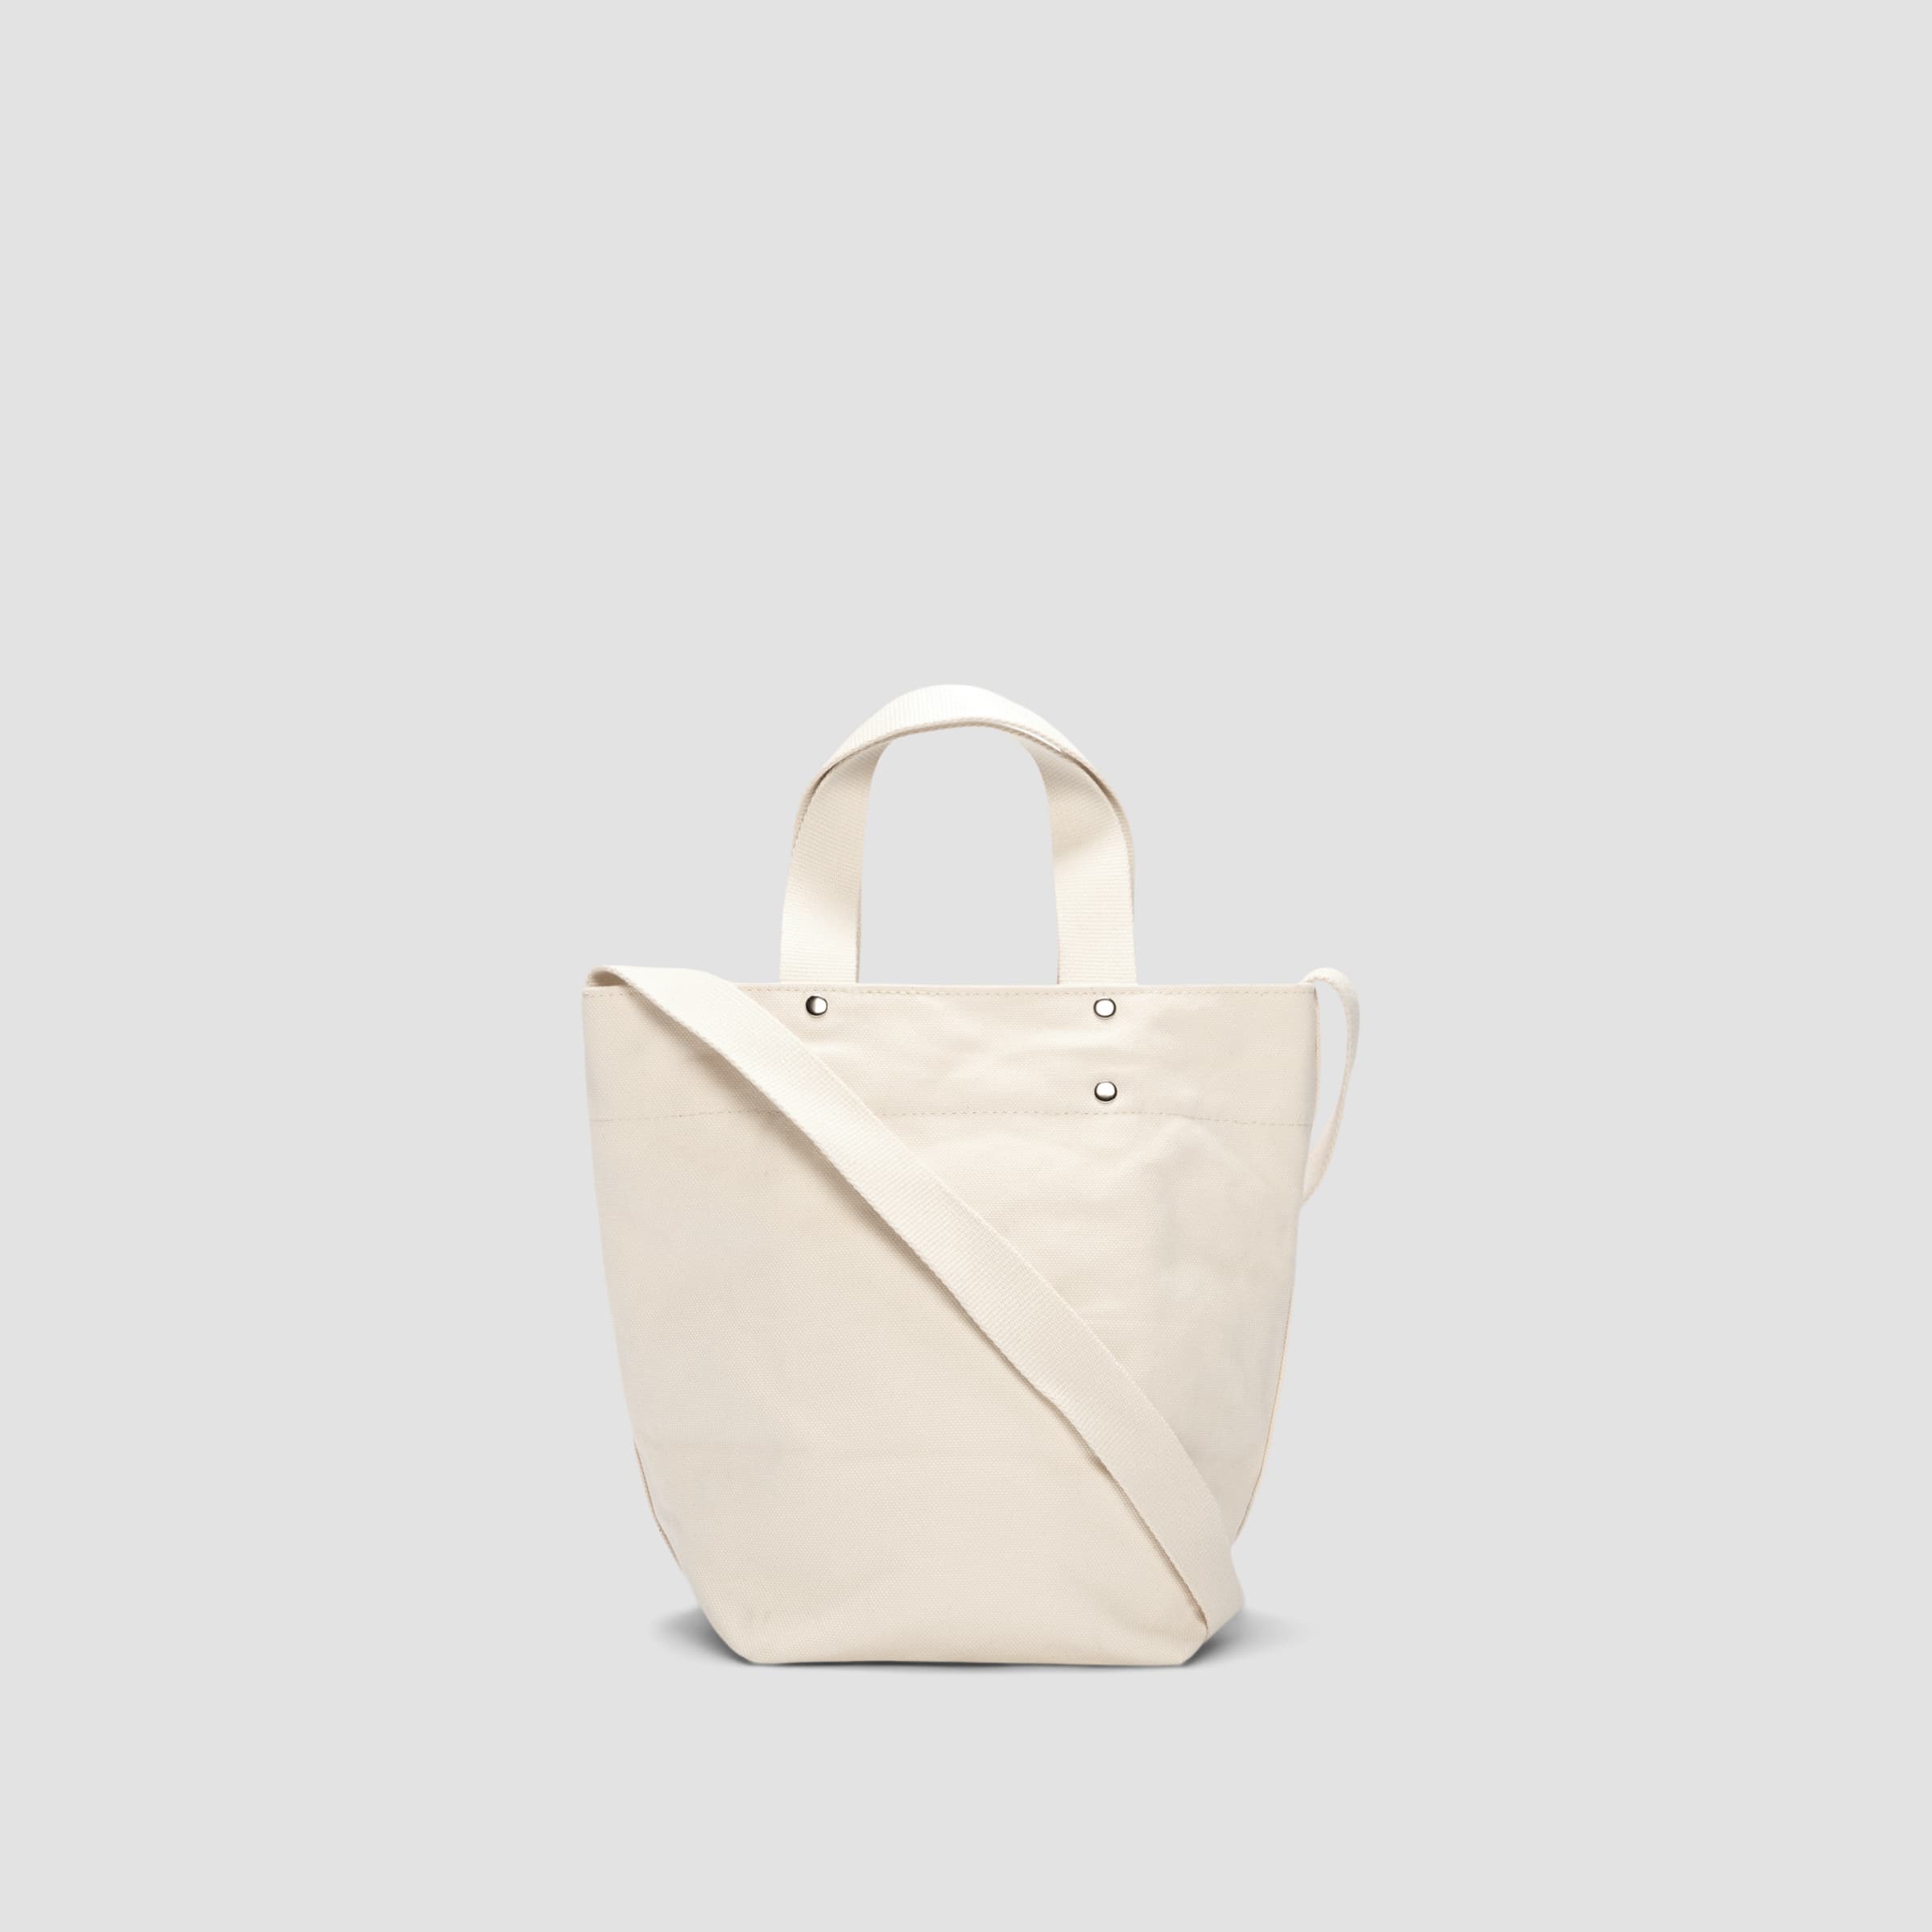 Plain Tote Bag White Pack of 4 - Thinkkraft